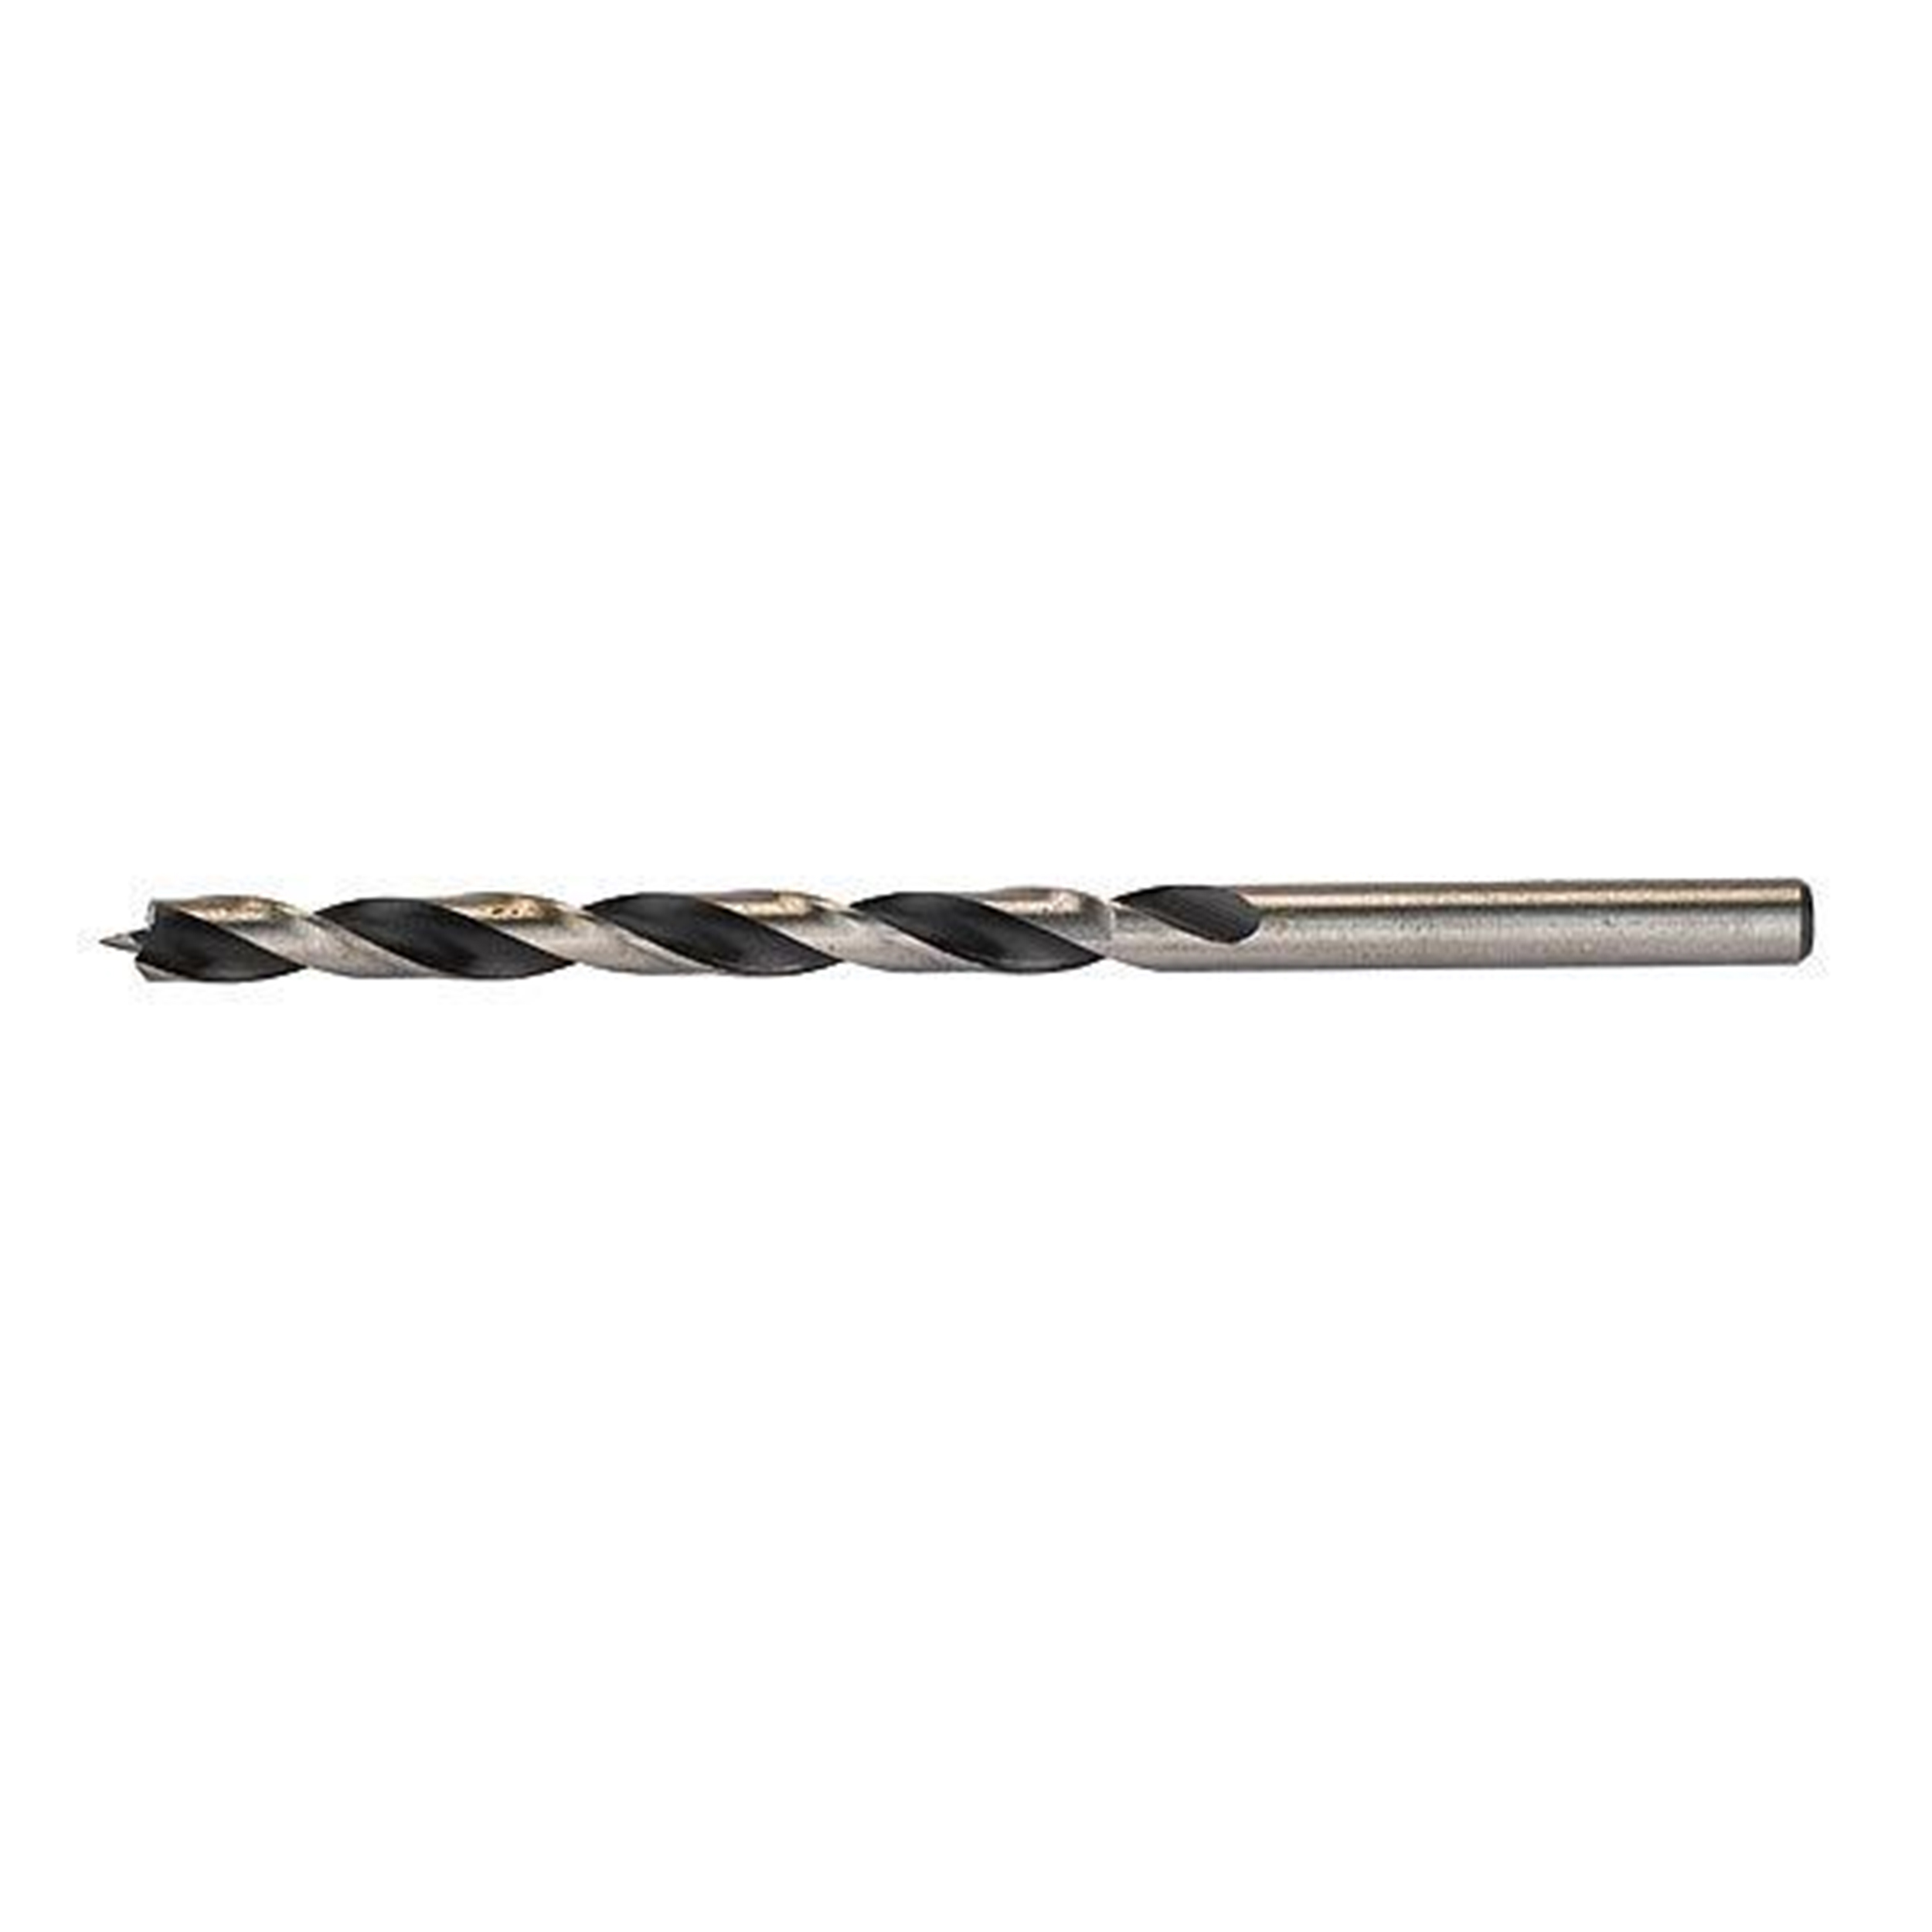 3/16-inch Chrome-vanadium Steel Brad Point Drill Bit